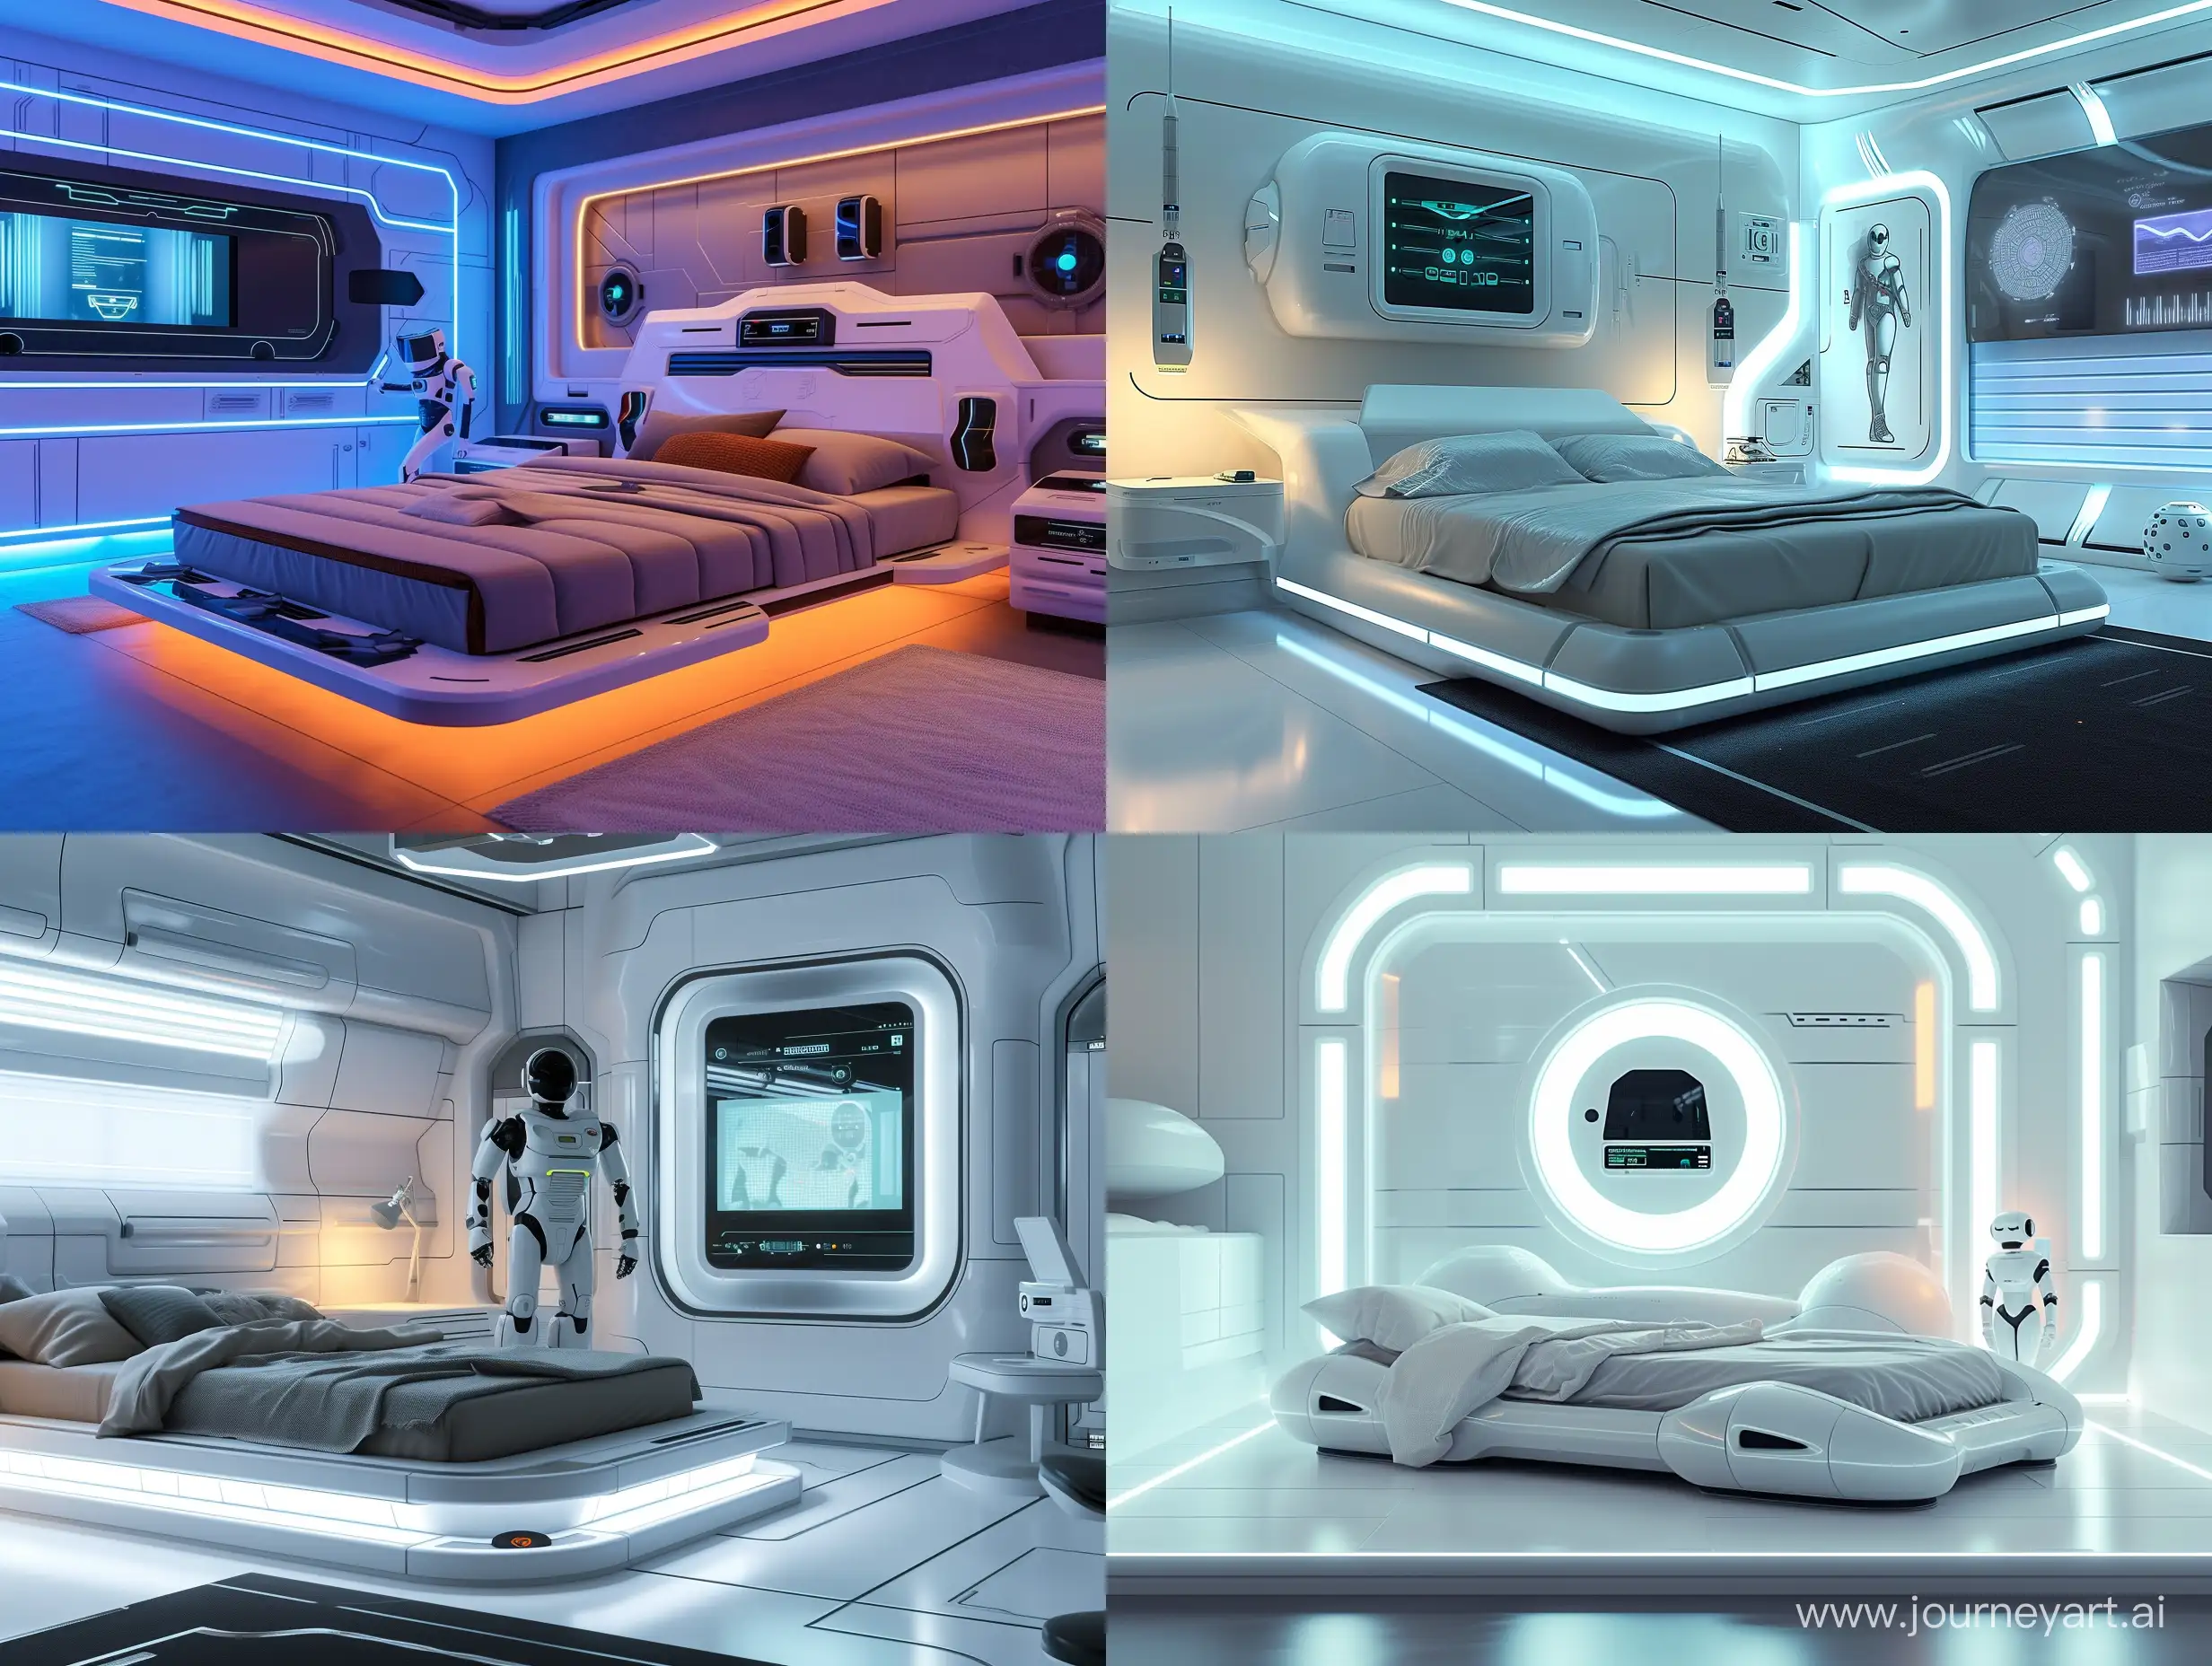 Futuristic-Smart-Bedroom-Design-with-Minimalist-Elegance-and-CuttingEdge-Technology